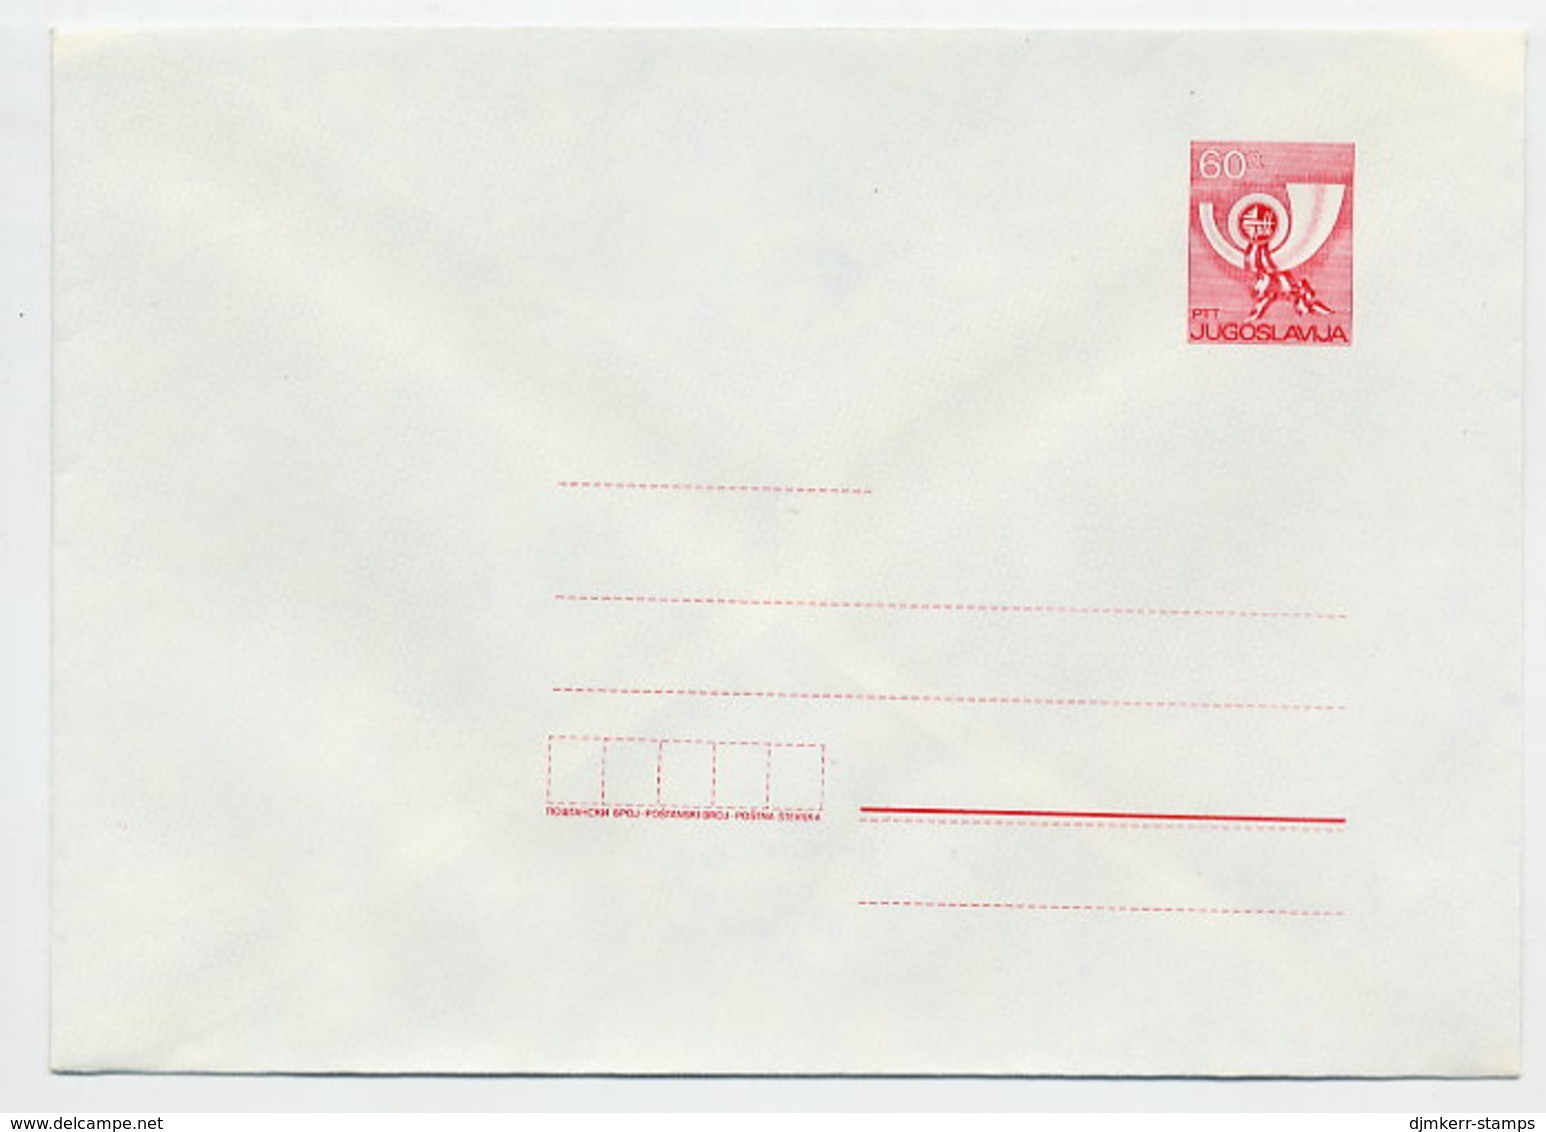 YUGOSLAVIA 1987 Posthorn 60 D. Envelope, Unused. Michel U77 - Ganzsachen